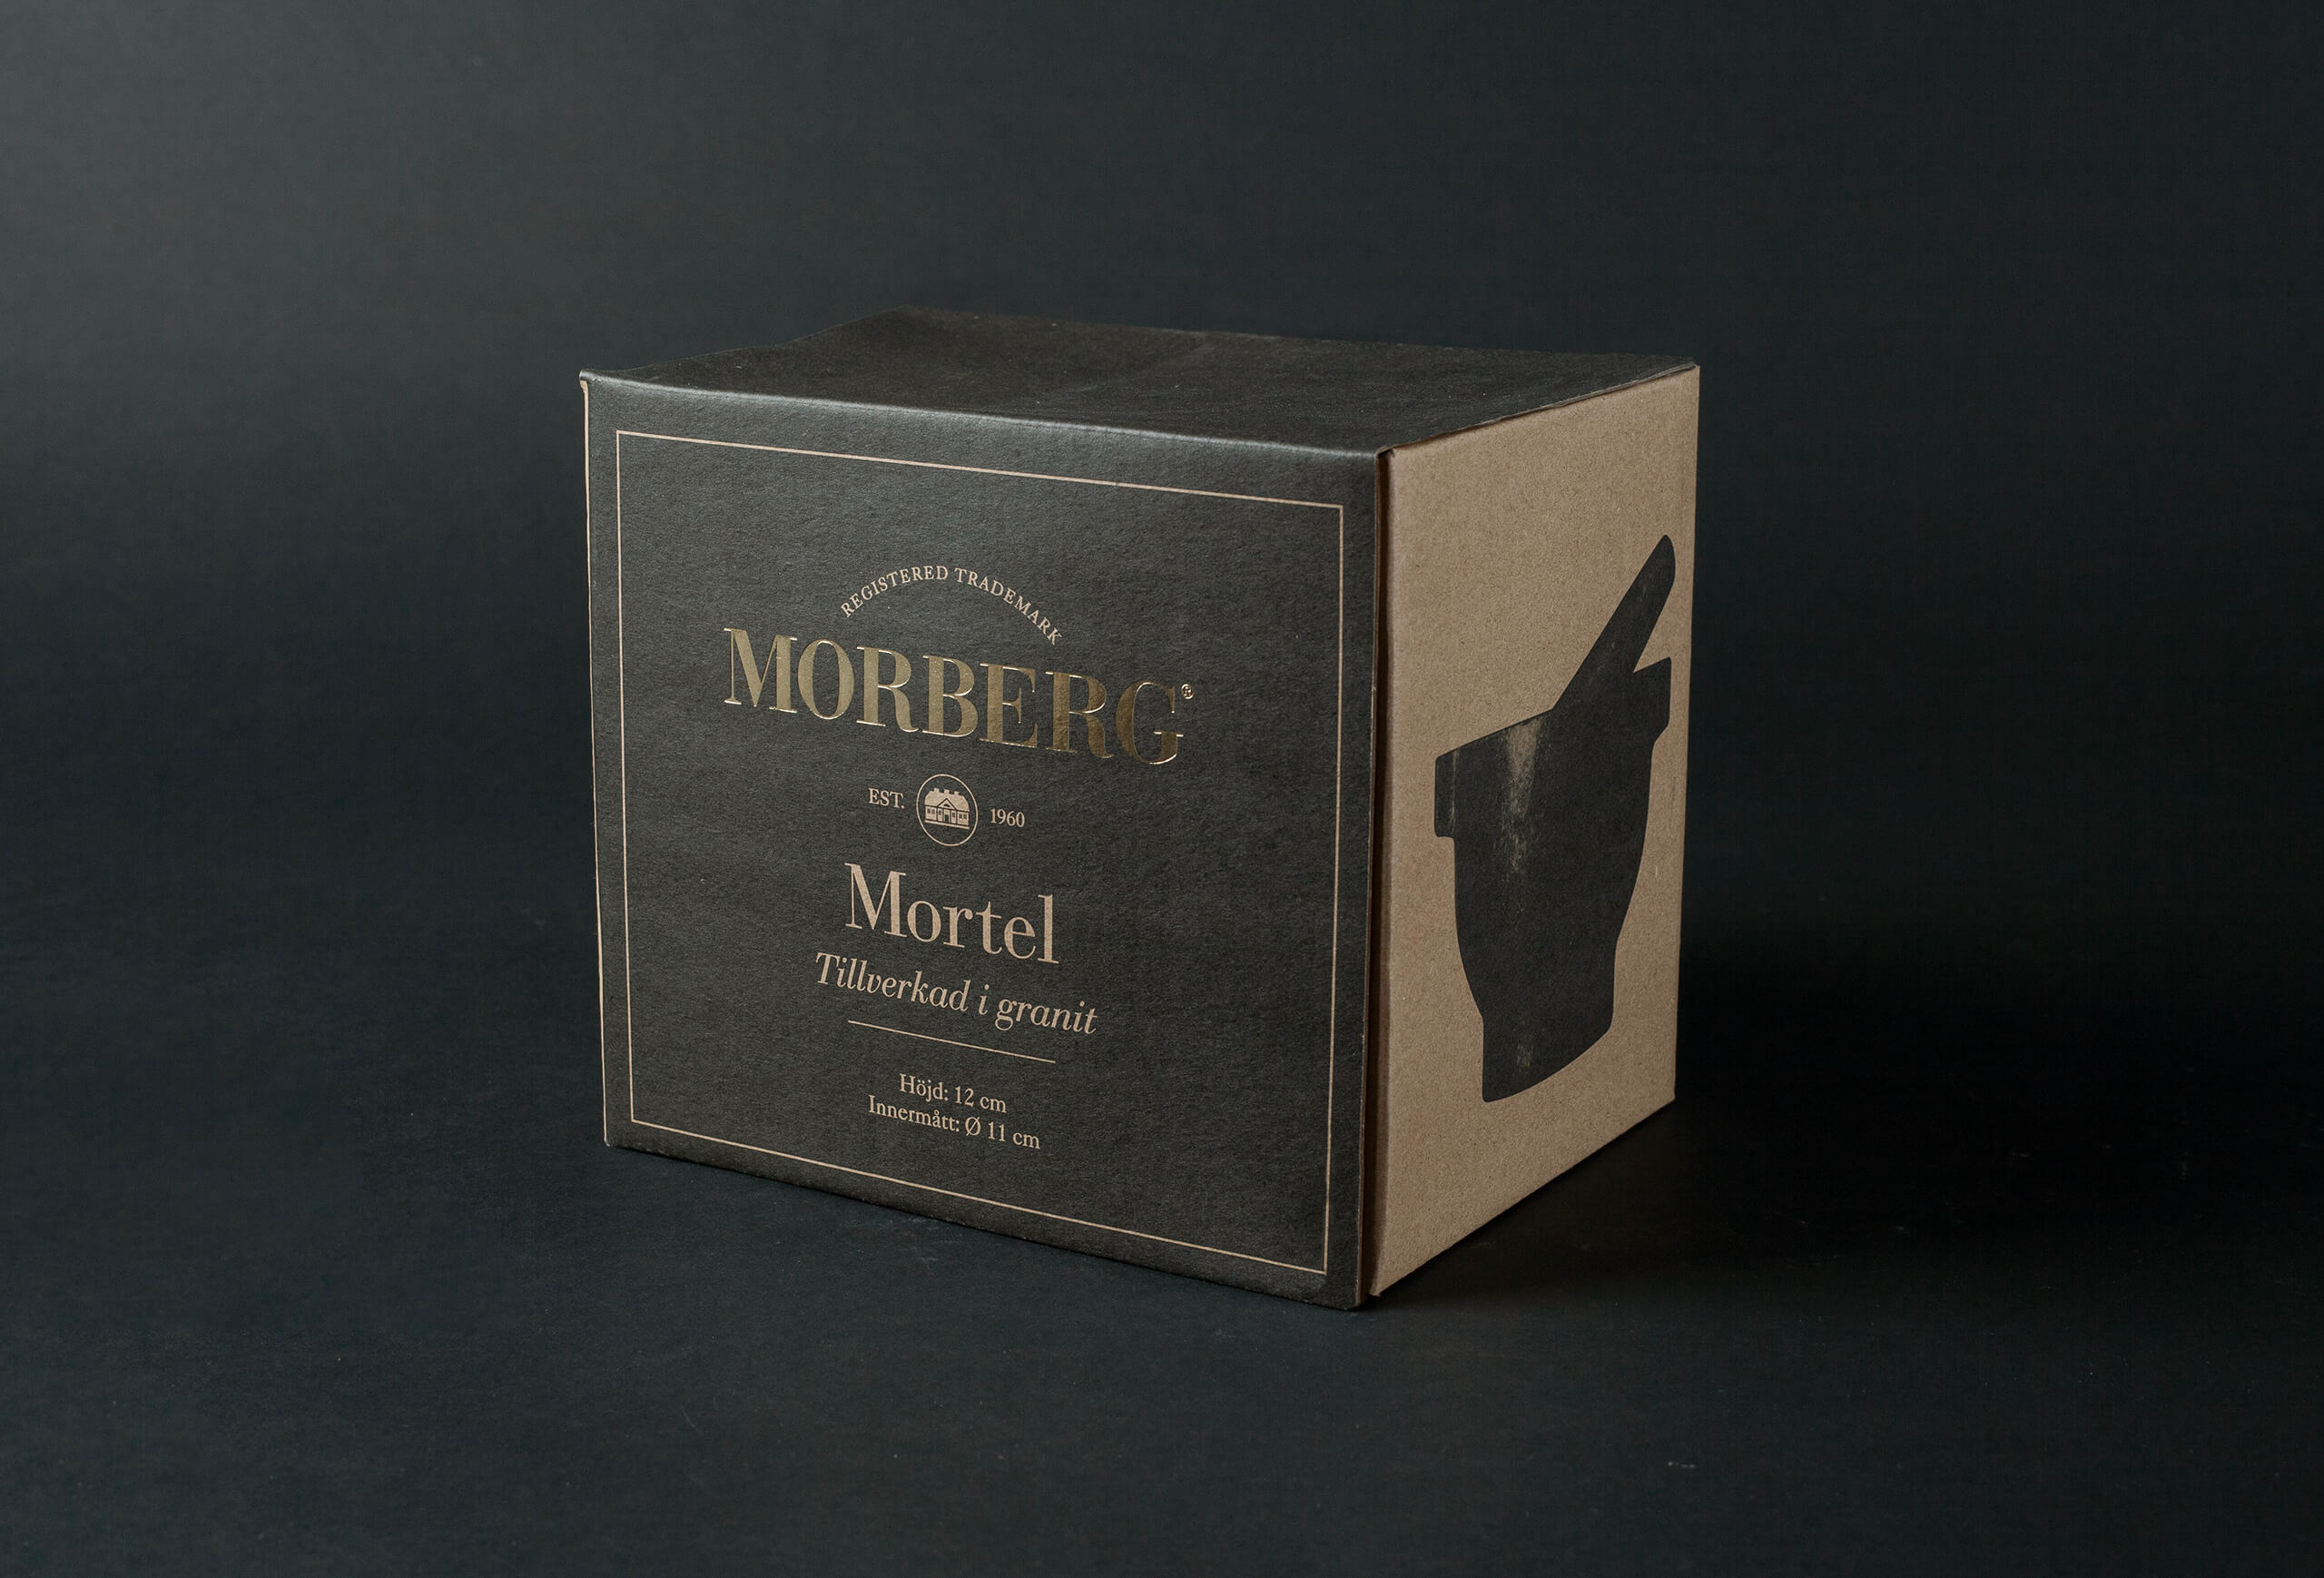 Morberg product box